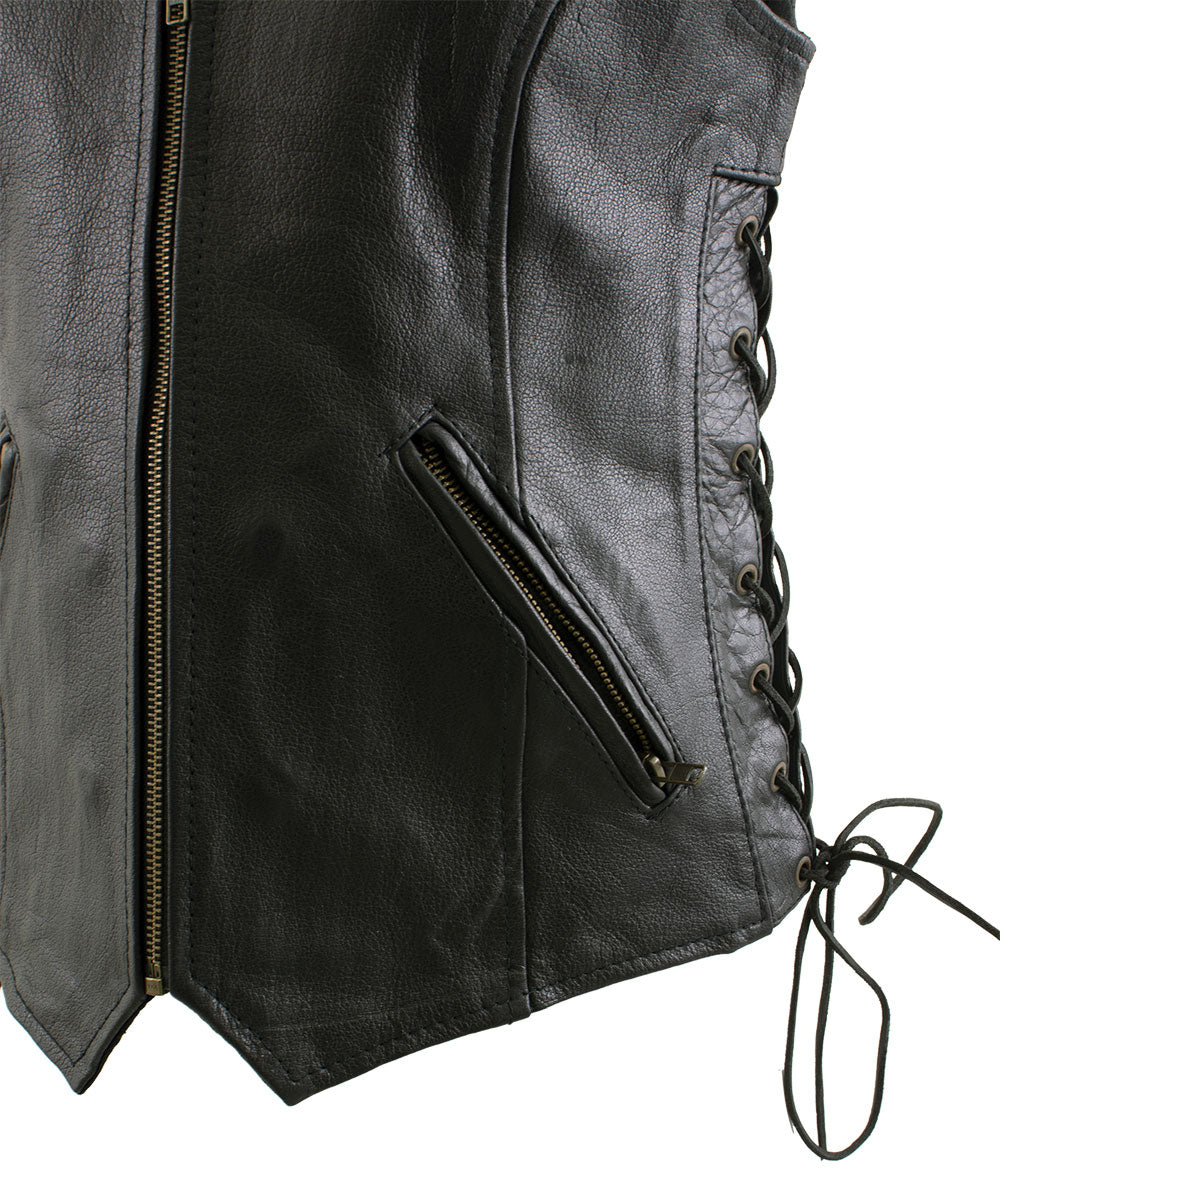 Xelement B277 Women's Black 'Mistress' Side Lace Motorcycle Leather Vest